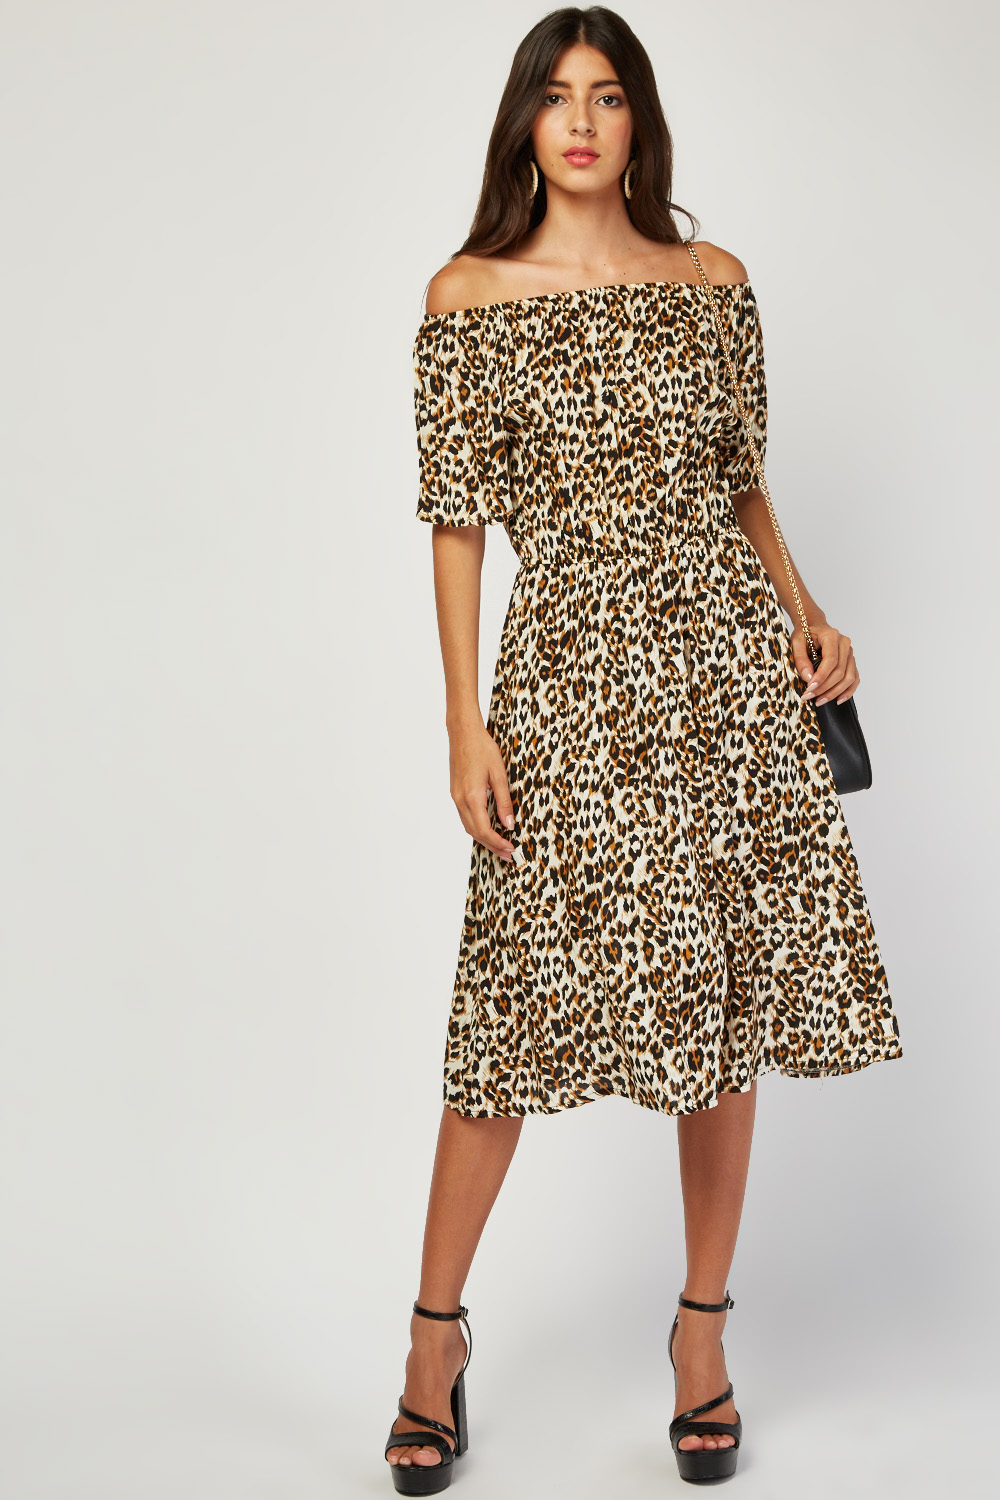 Off Shoulder Midi Leopard Print Dress Just 7